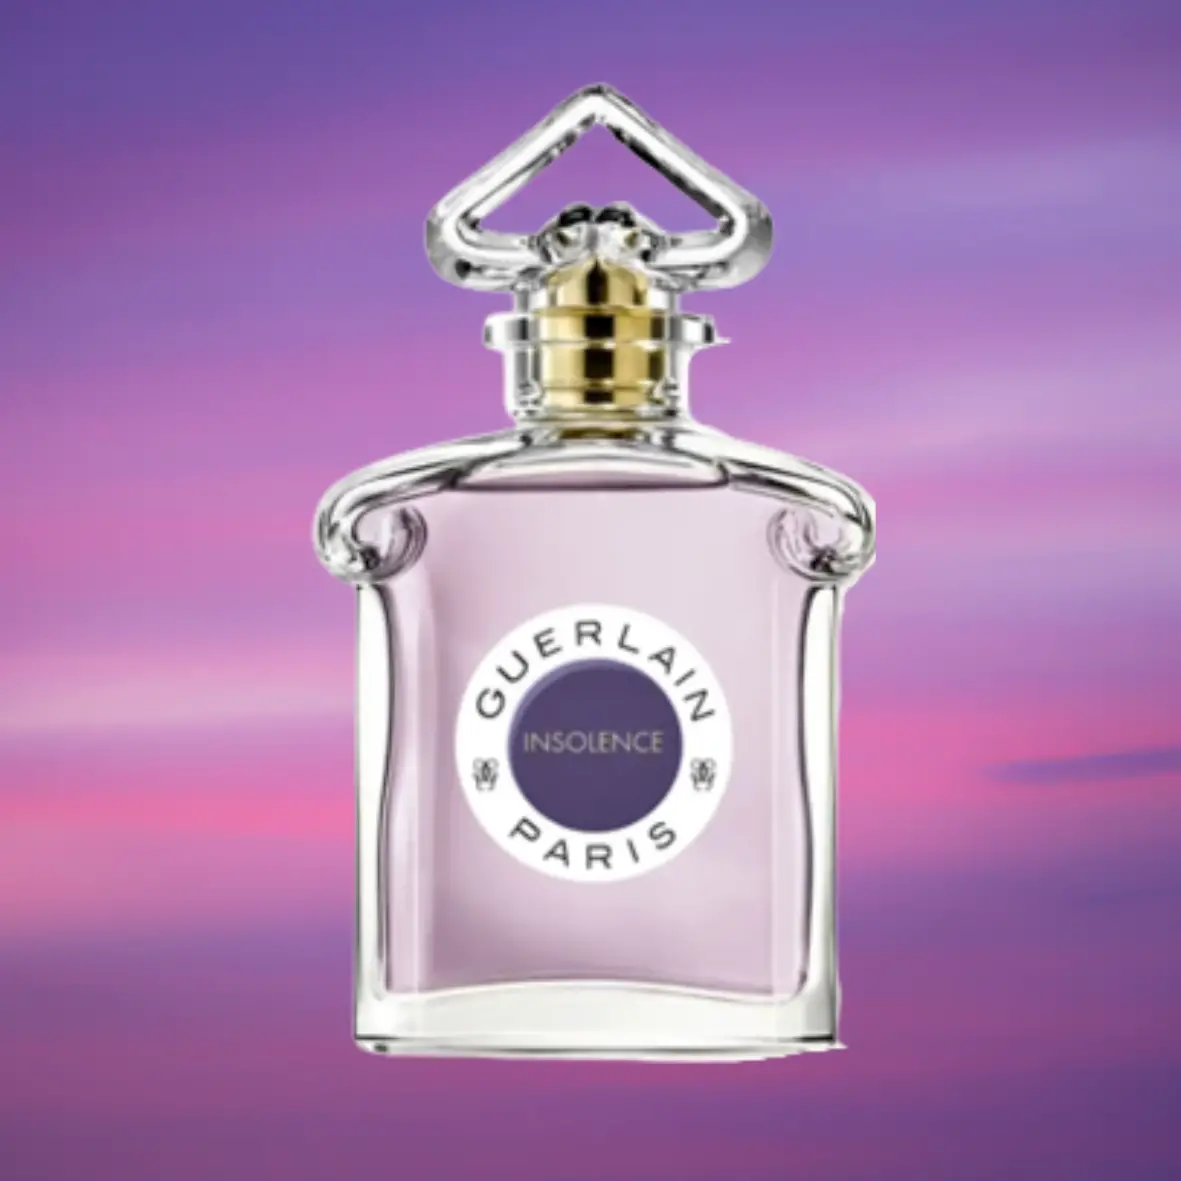 Guerlain Insolence
Best Violet Perfumes